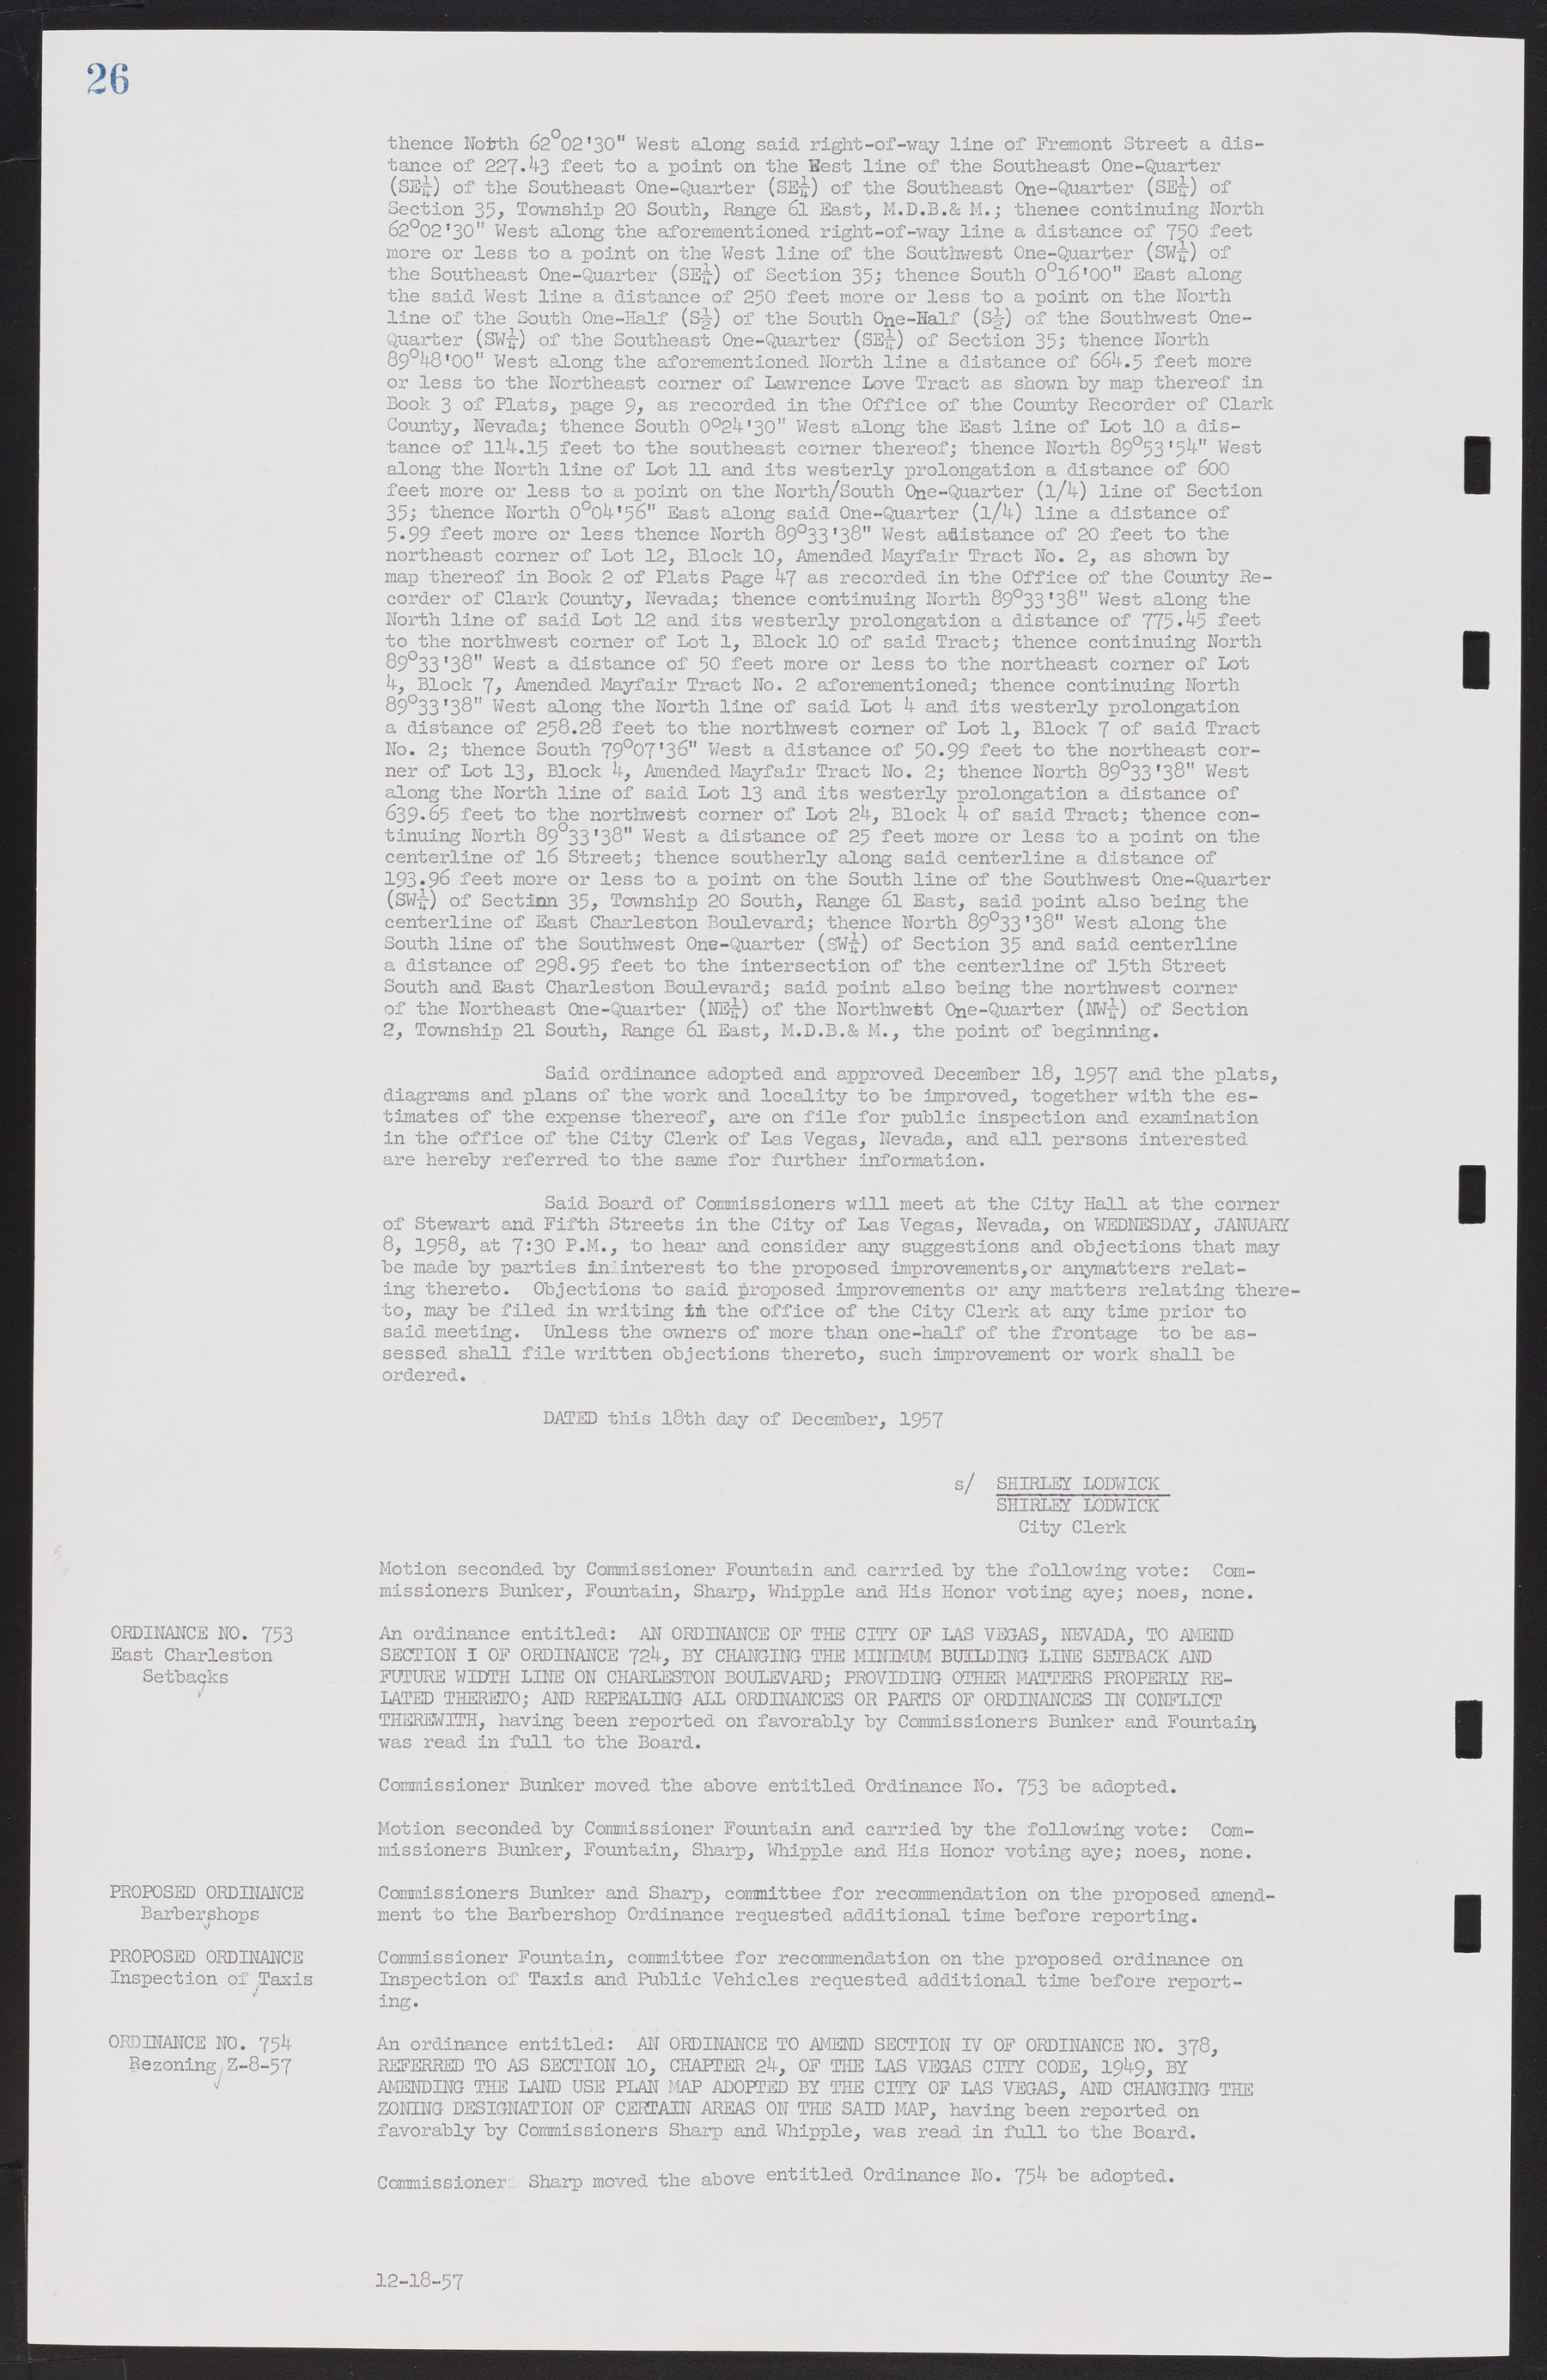 Las Vegas City Commission Minutes, November 20, 1957 to December 2, 1959, lvc000011-30